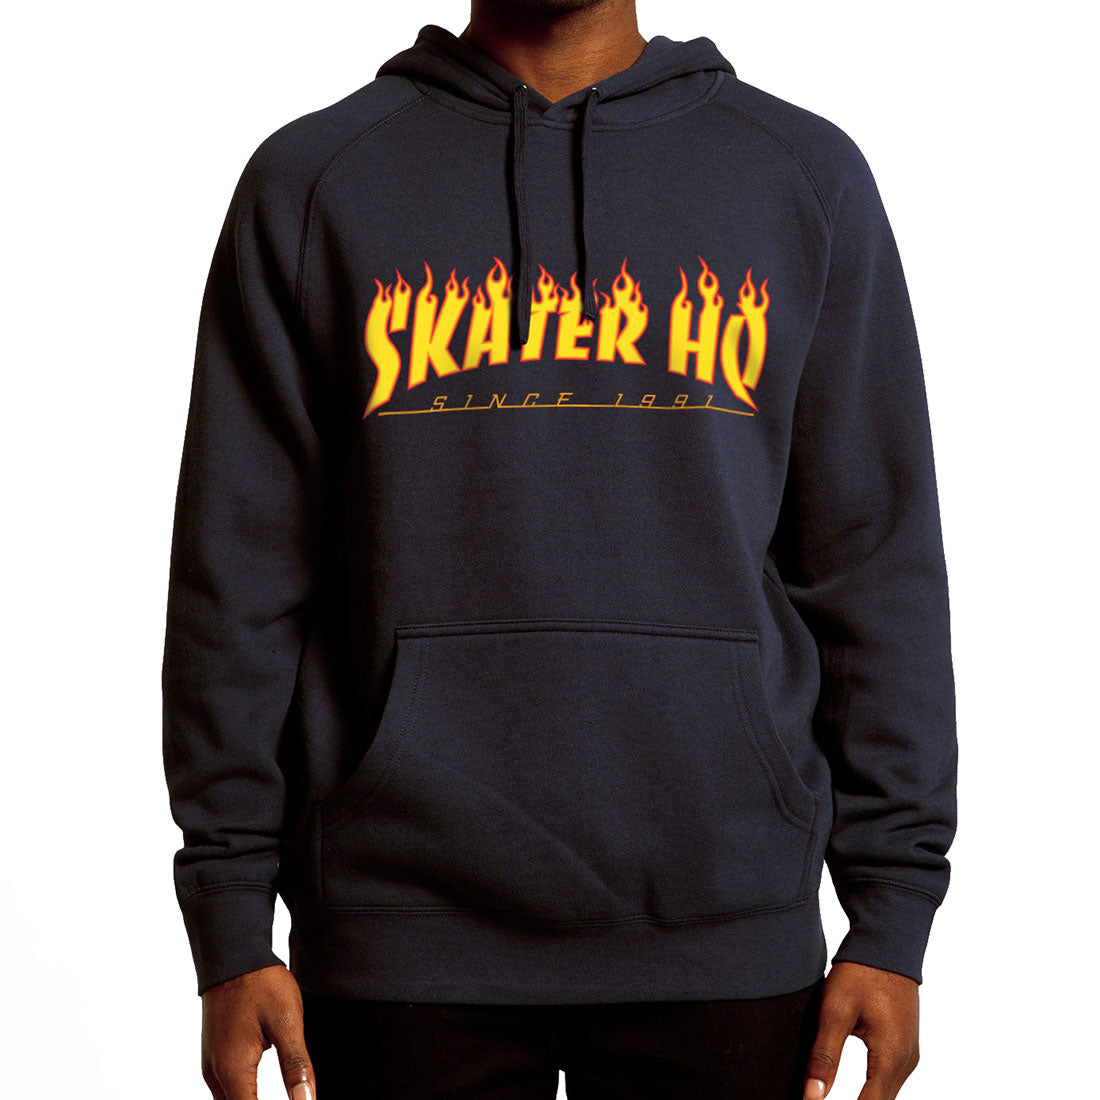 Skater HQ Team Flames Hoody - Black Apparel Skater HQ Clothing